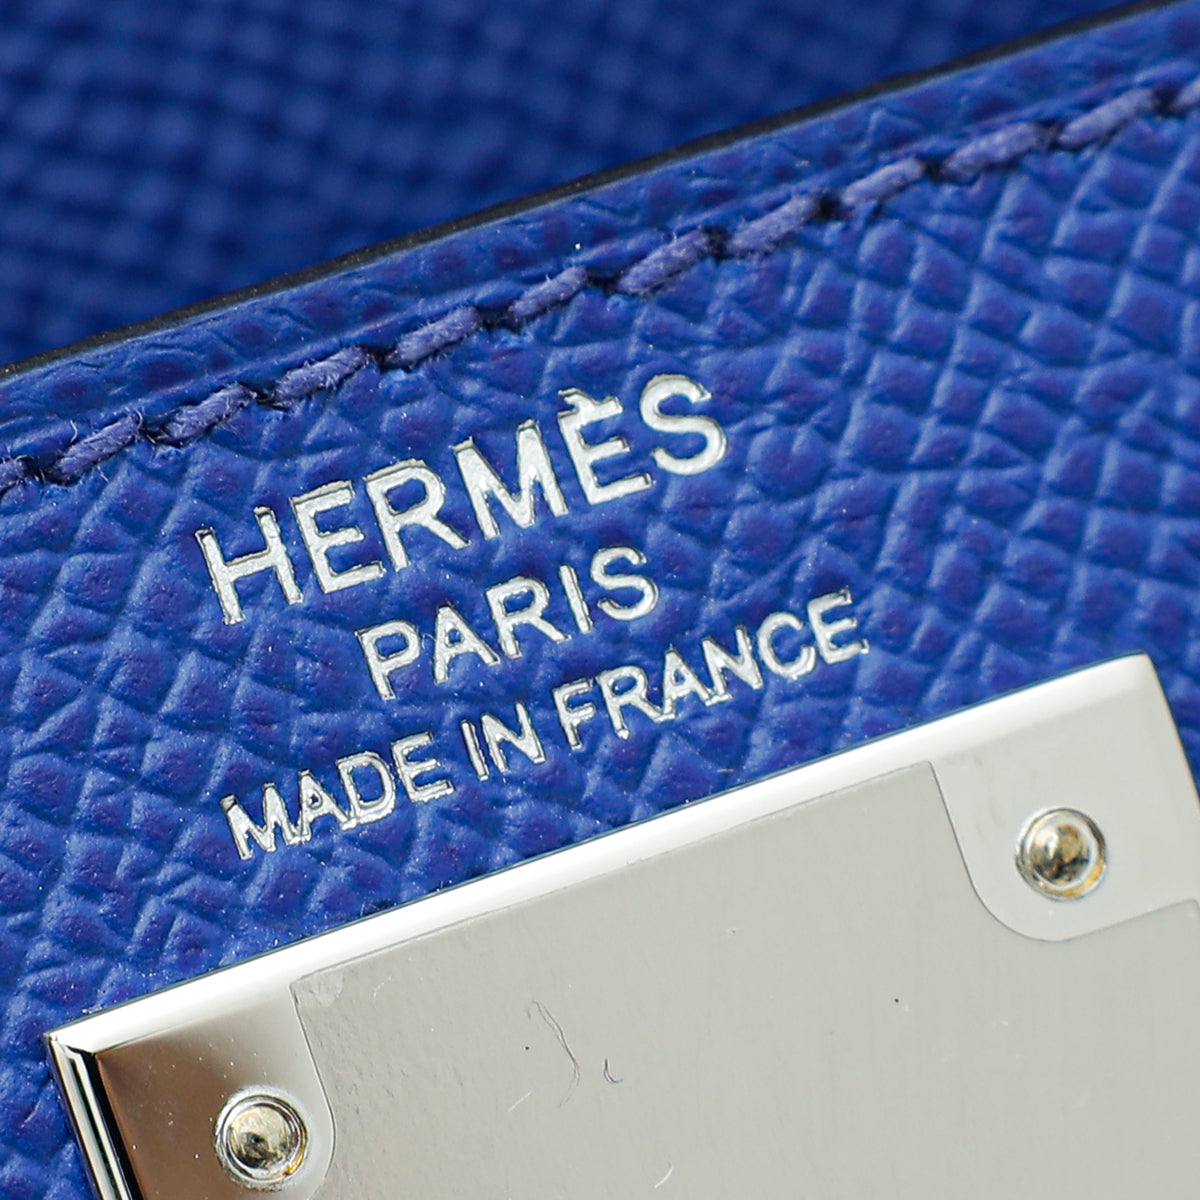 Hermes Bleu Electric 28 Sellier Kelly Bag